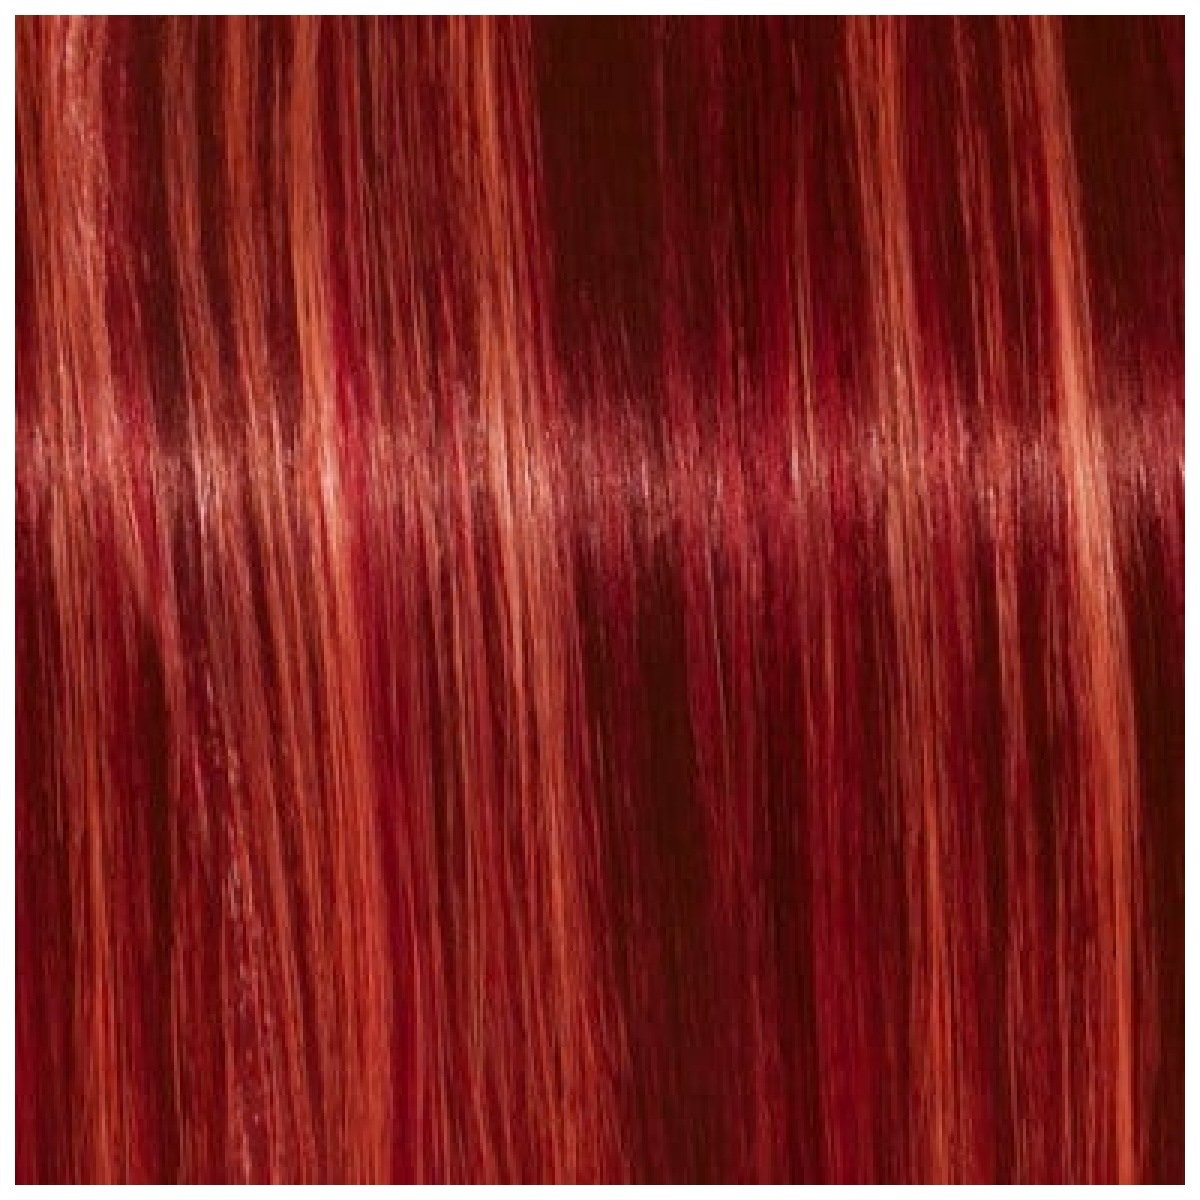 Amazoncom  Schwarzkopf Igora Royal Hair Color  color  777 Medium  Blonde Copper Extra  Beauty  Personal Care